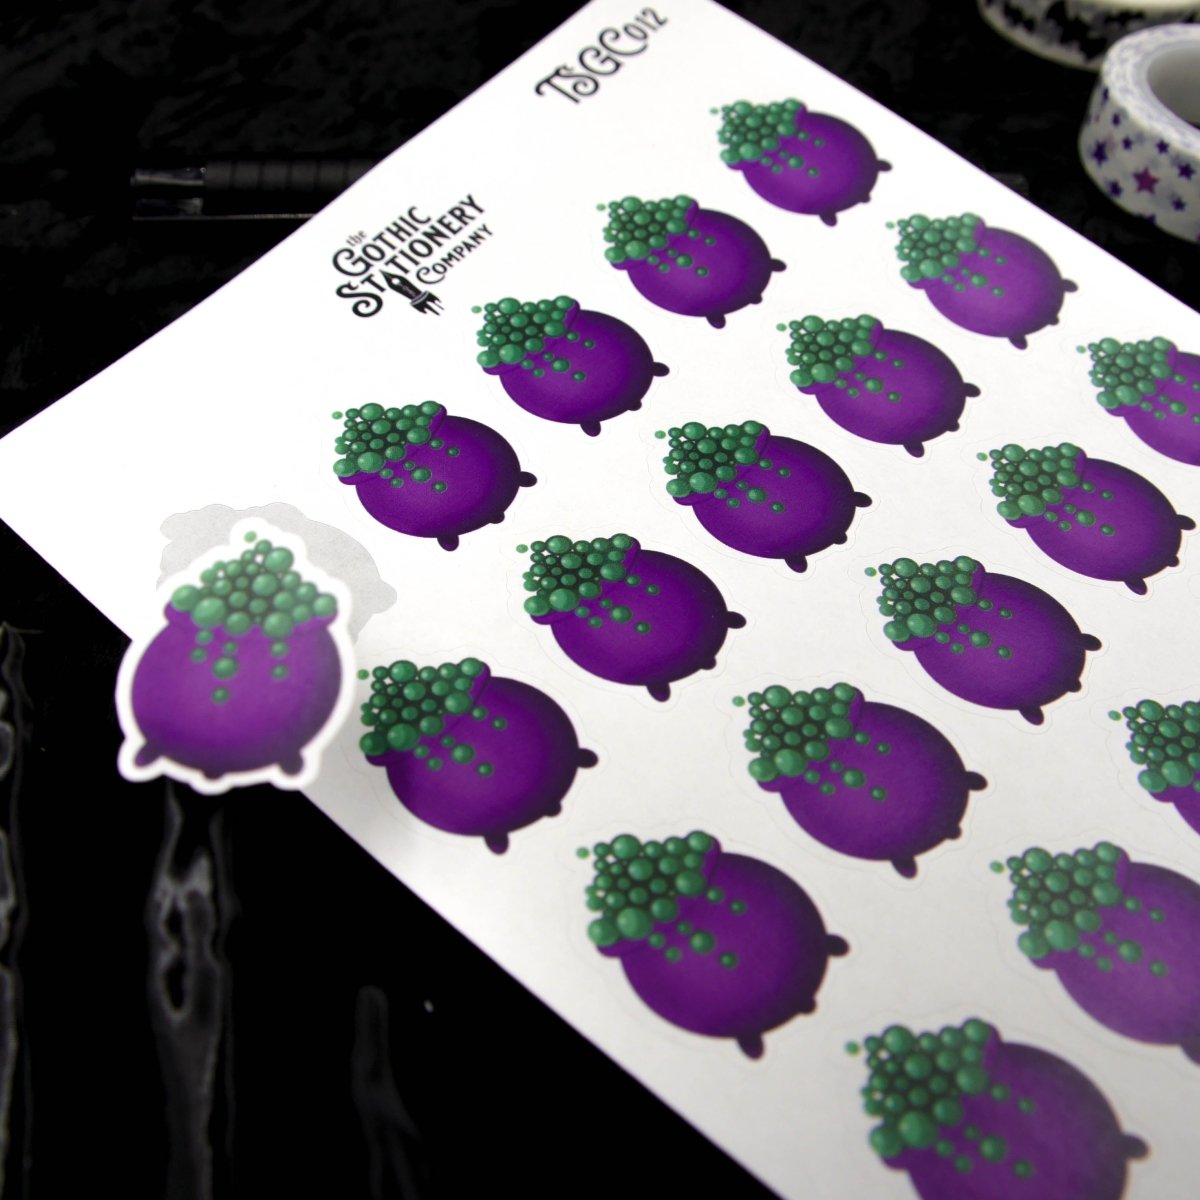 Bubbling Cauldron Planner Stickers in purple